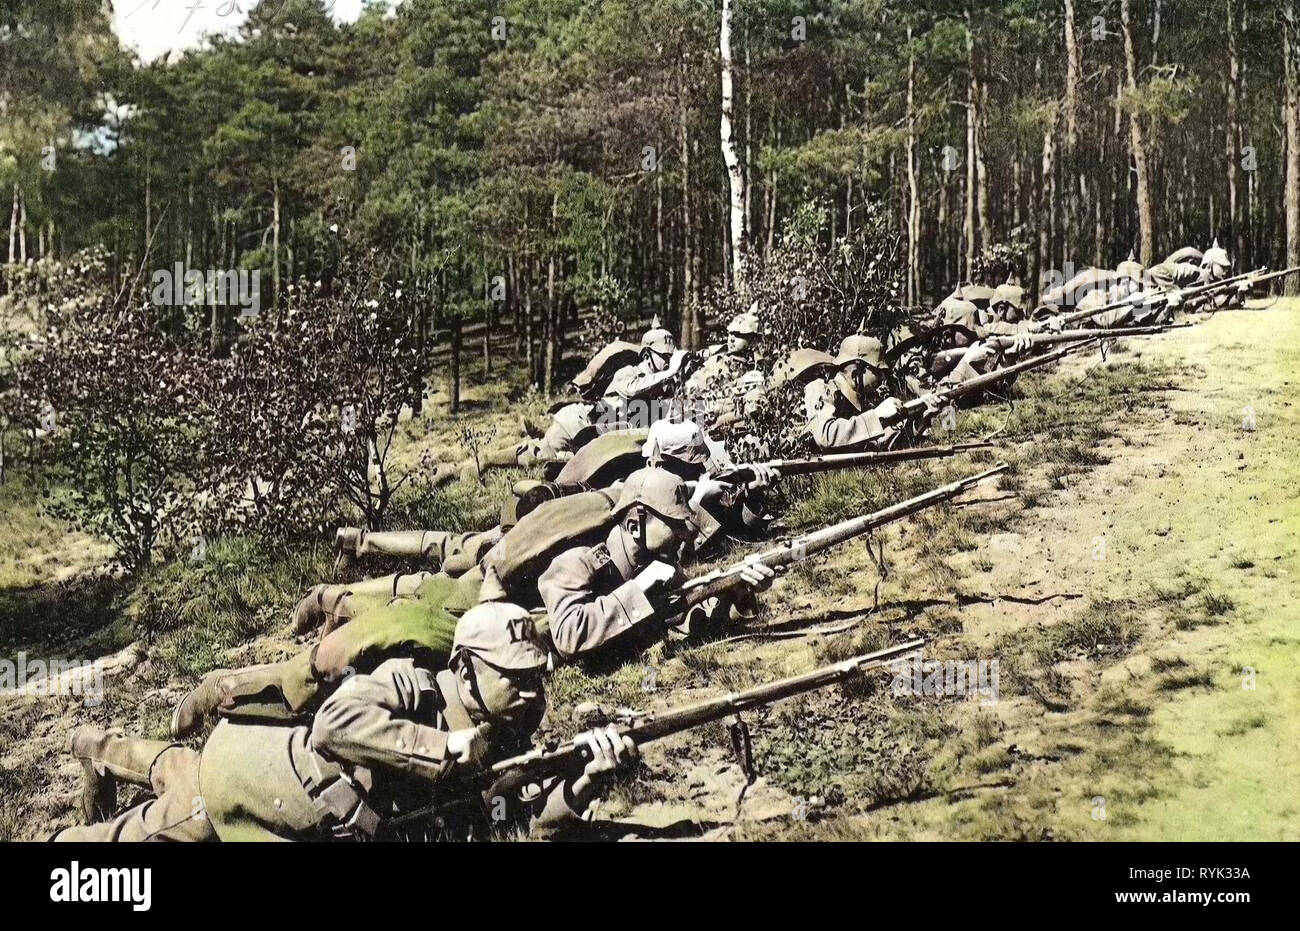 12. Königlich Sächsisches Infanterie-Regiment Nr. 177, uso de armas, fusiles Mauser, Pickelhaube de Alemania de 1914, Dresde, en Feuerstellung Schützen Foto de stock